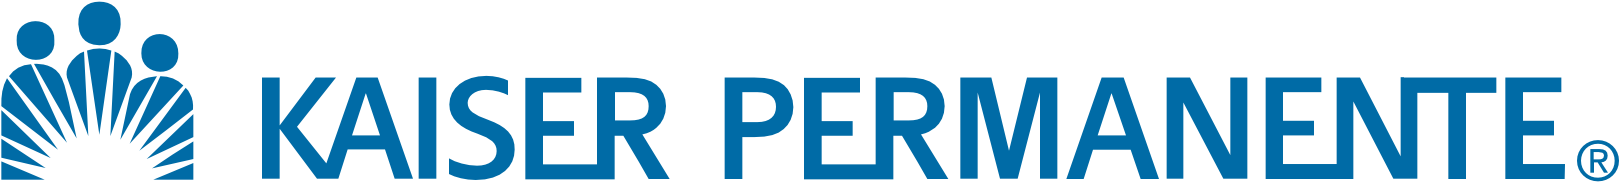 KaiserPermanente Logo.png